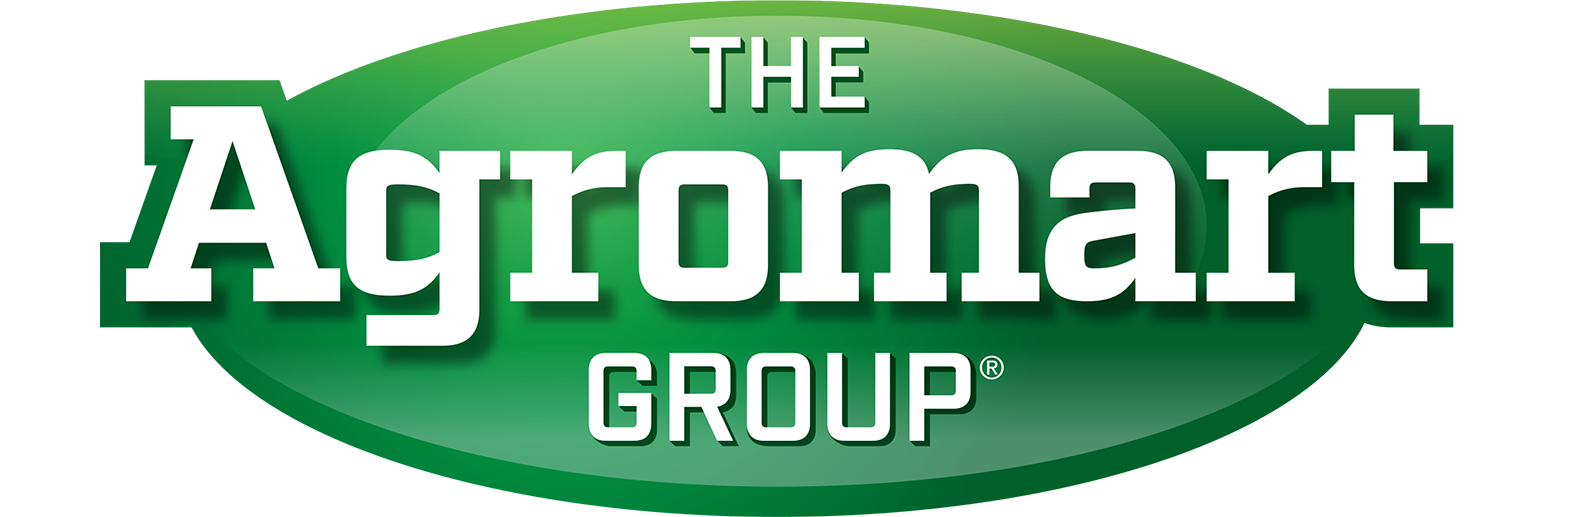 the Agromart Group logo